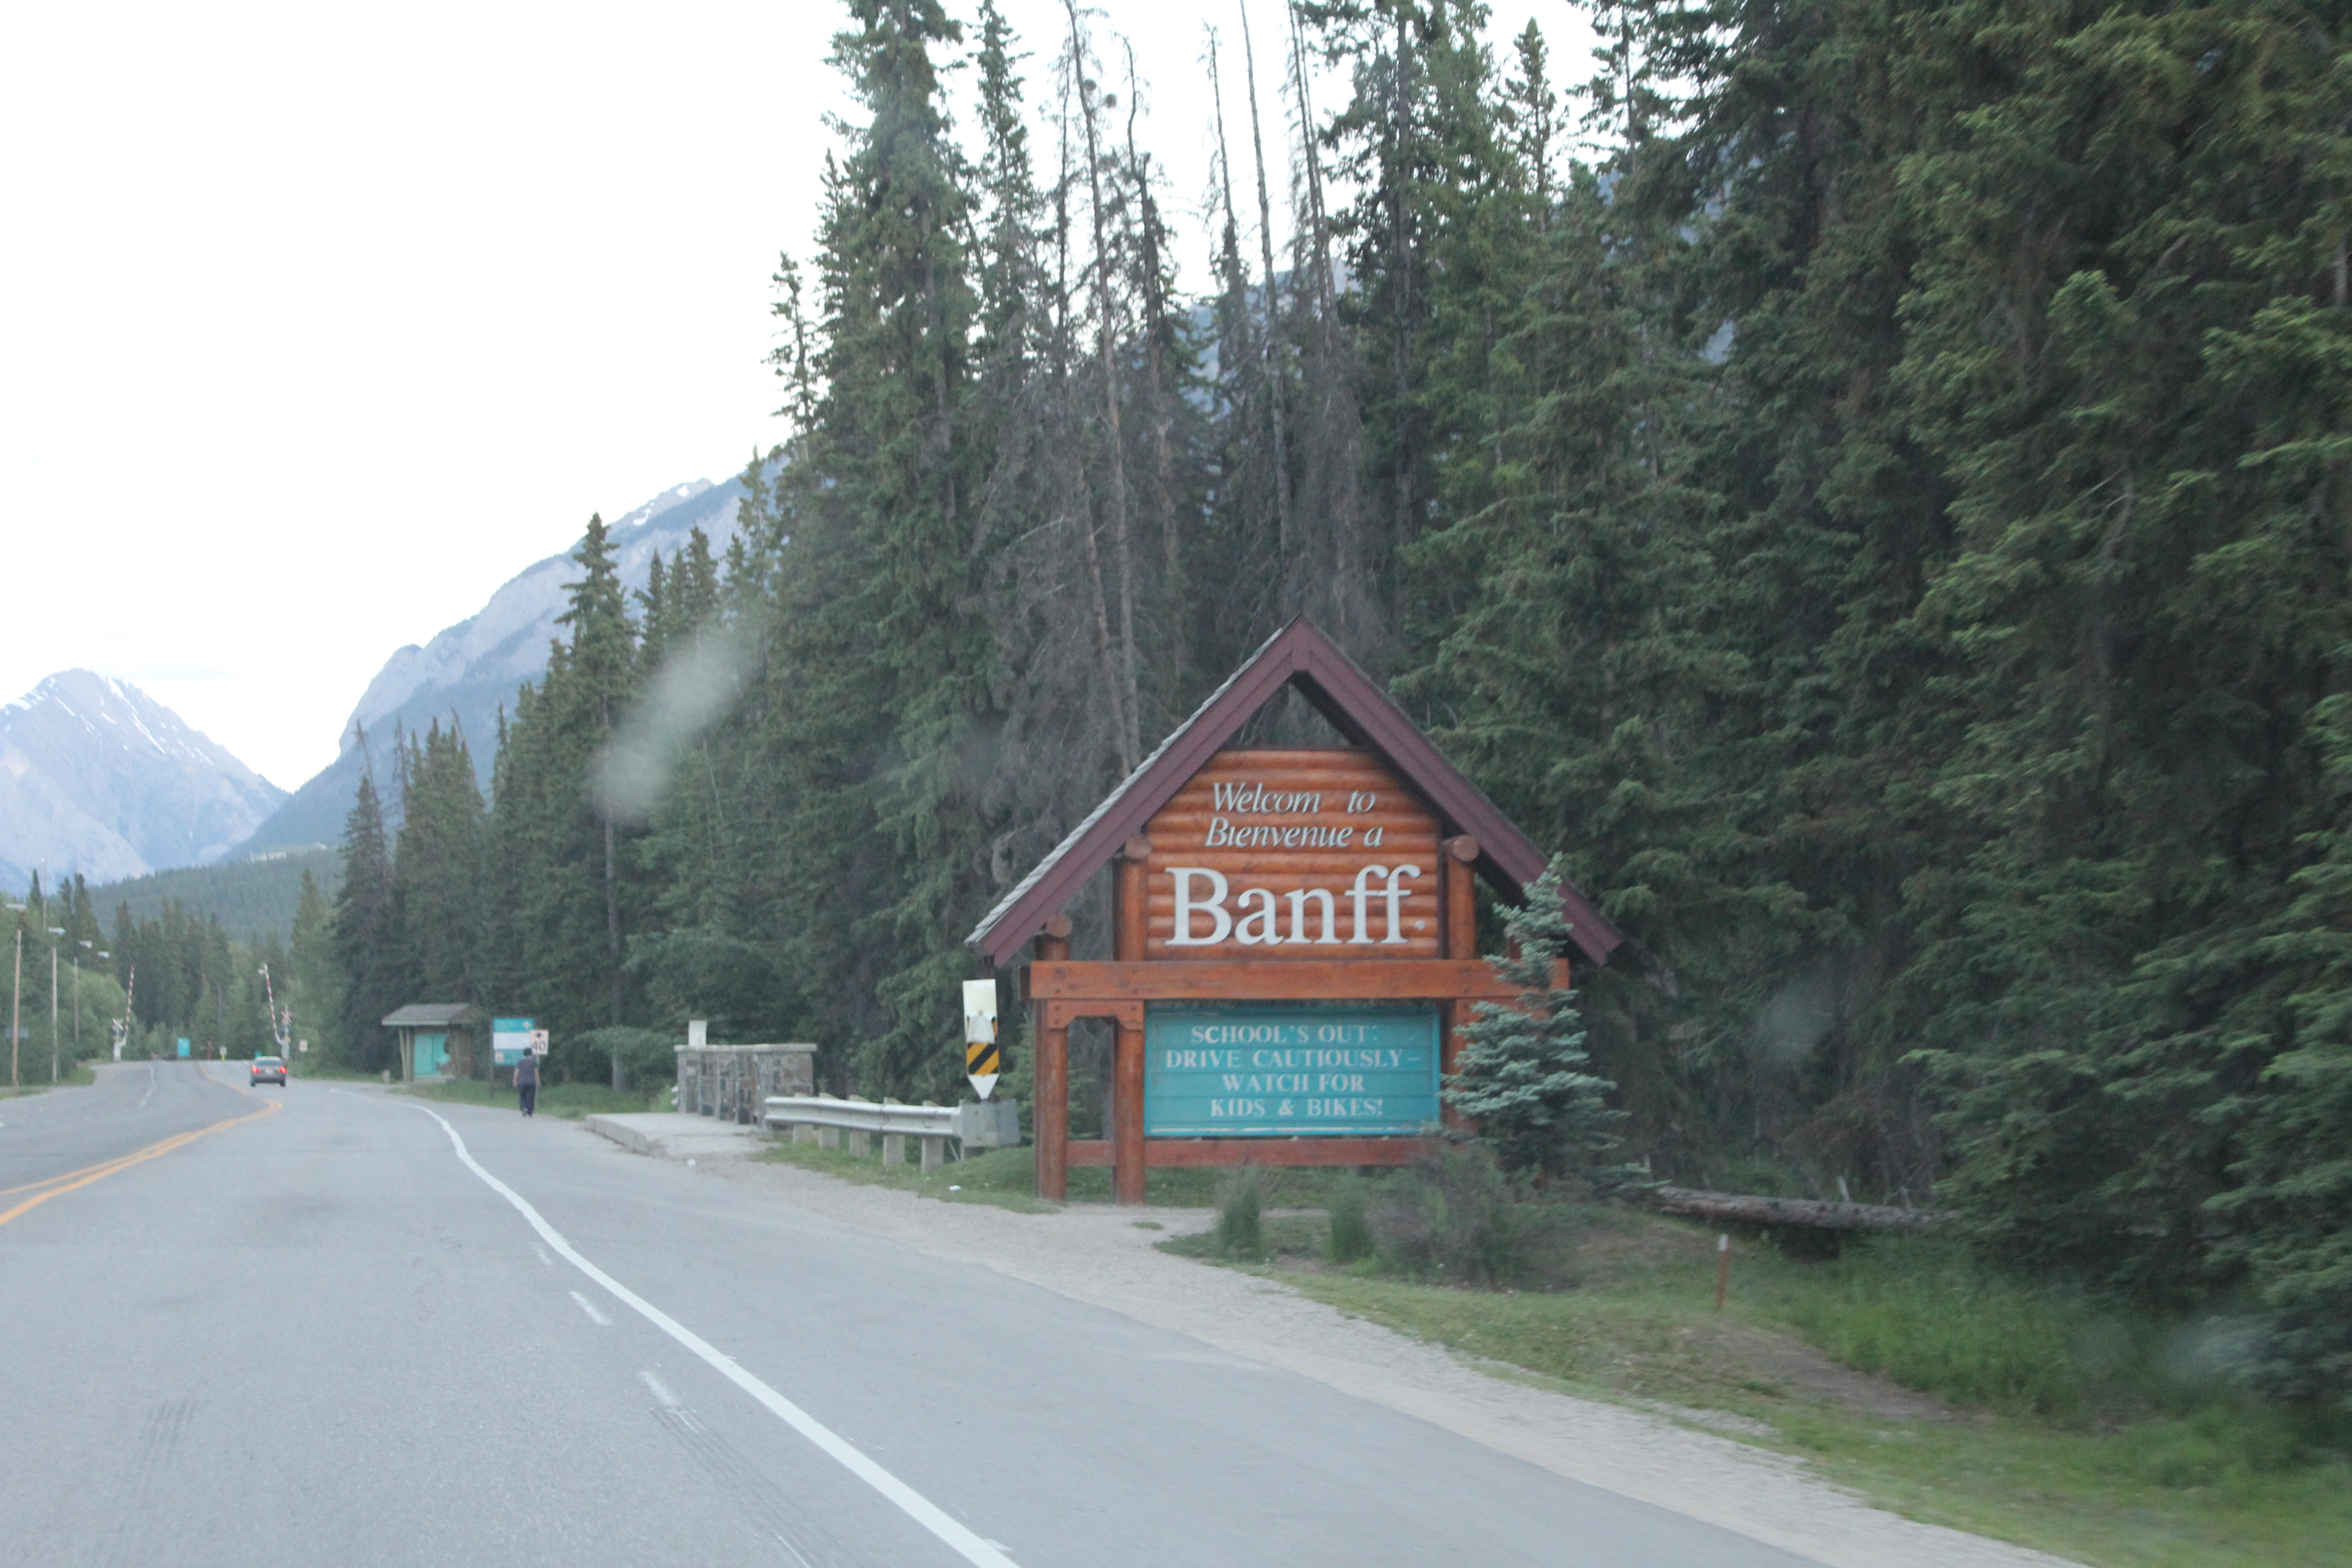 2011 July Break - Alberta, Canada (Lake Louise, Banff)